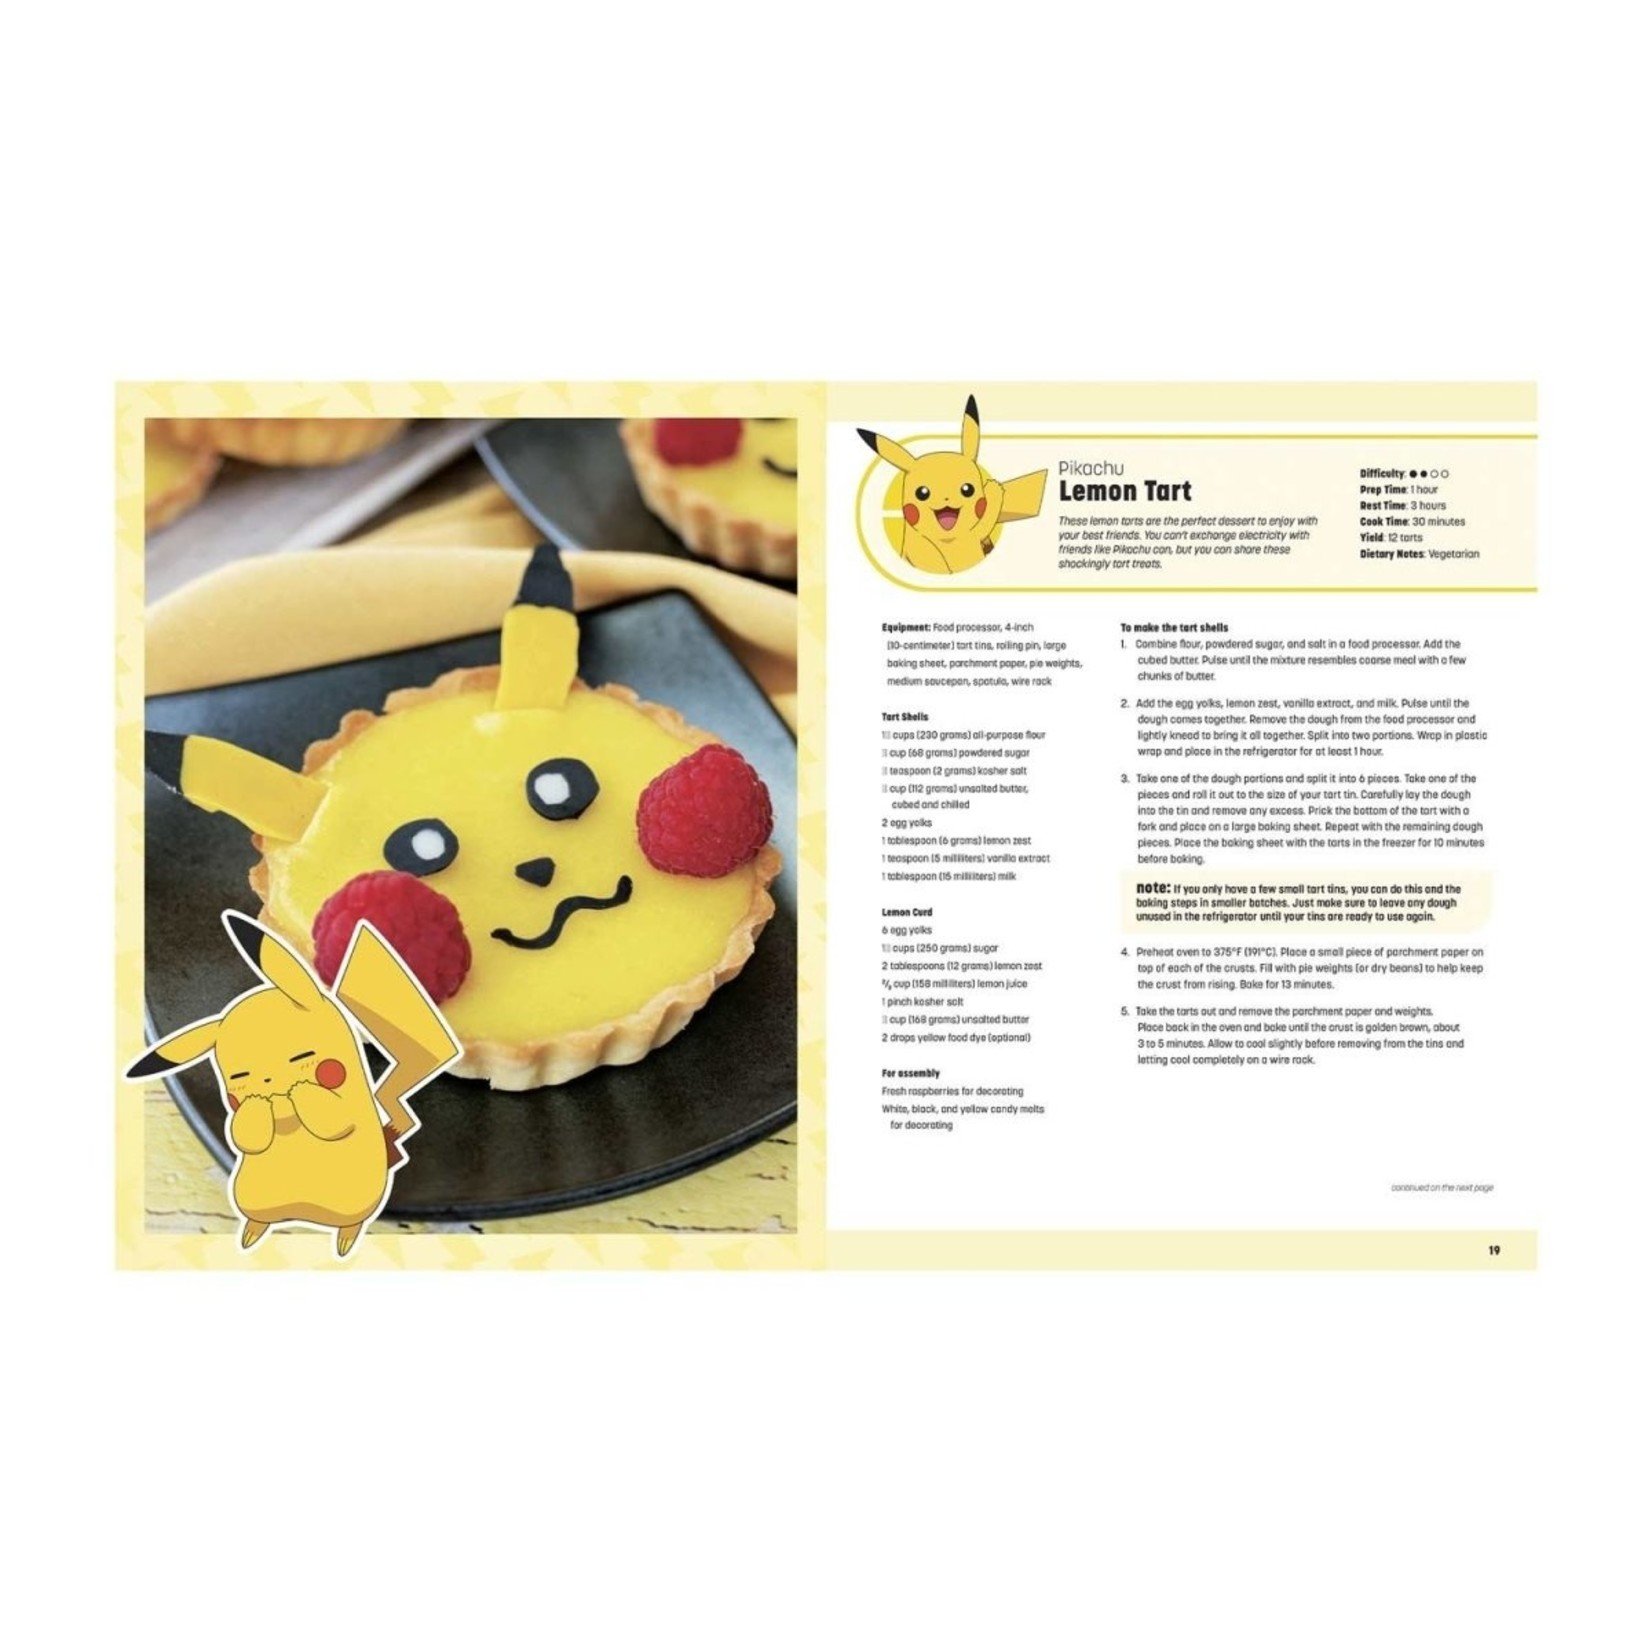 My Pokémon Cookbook